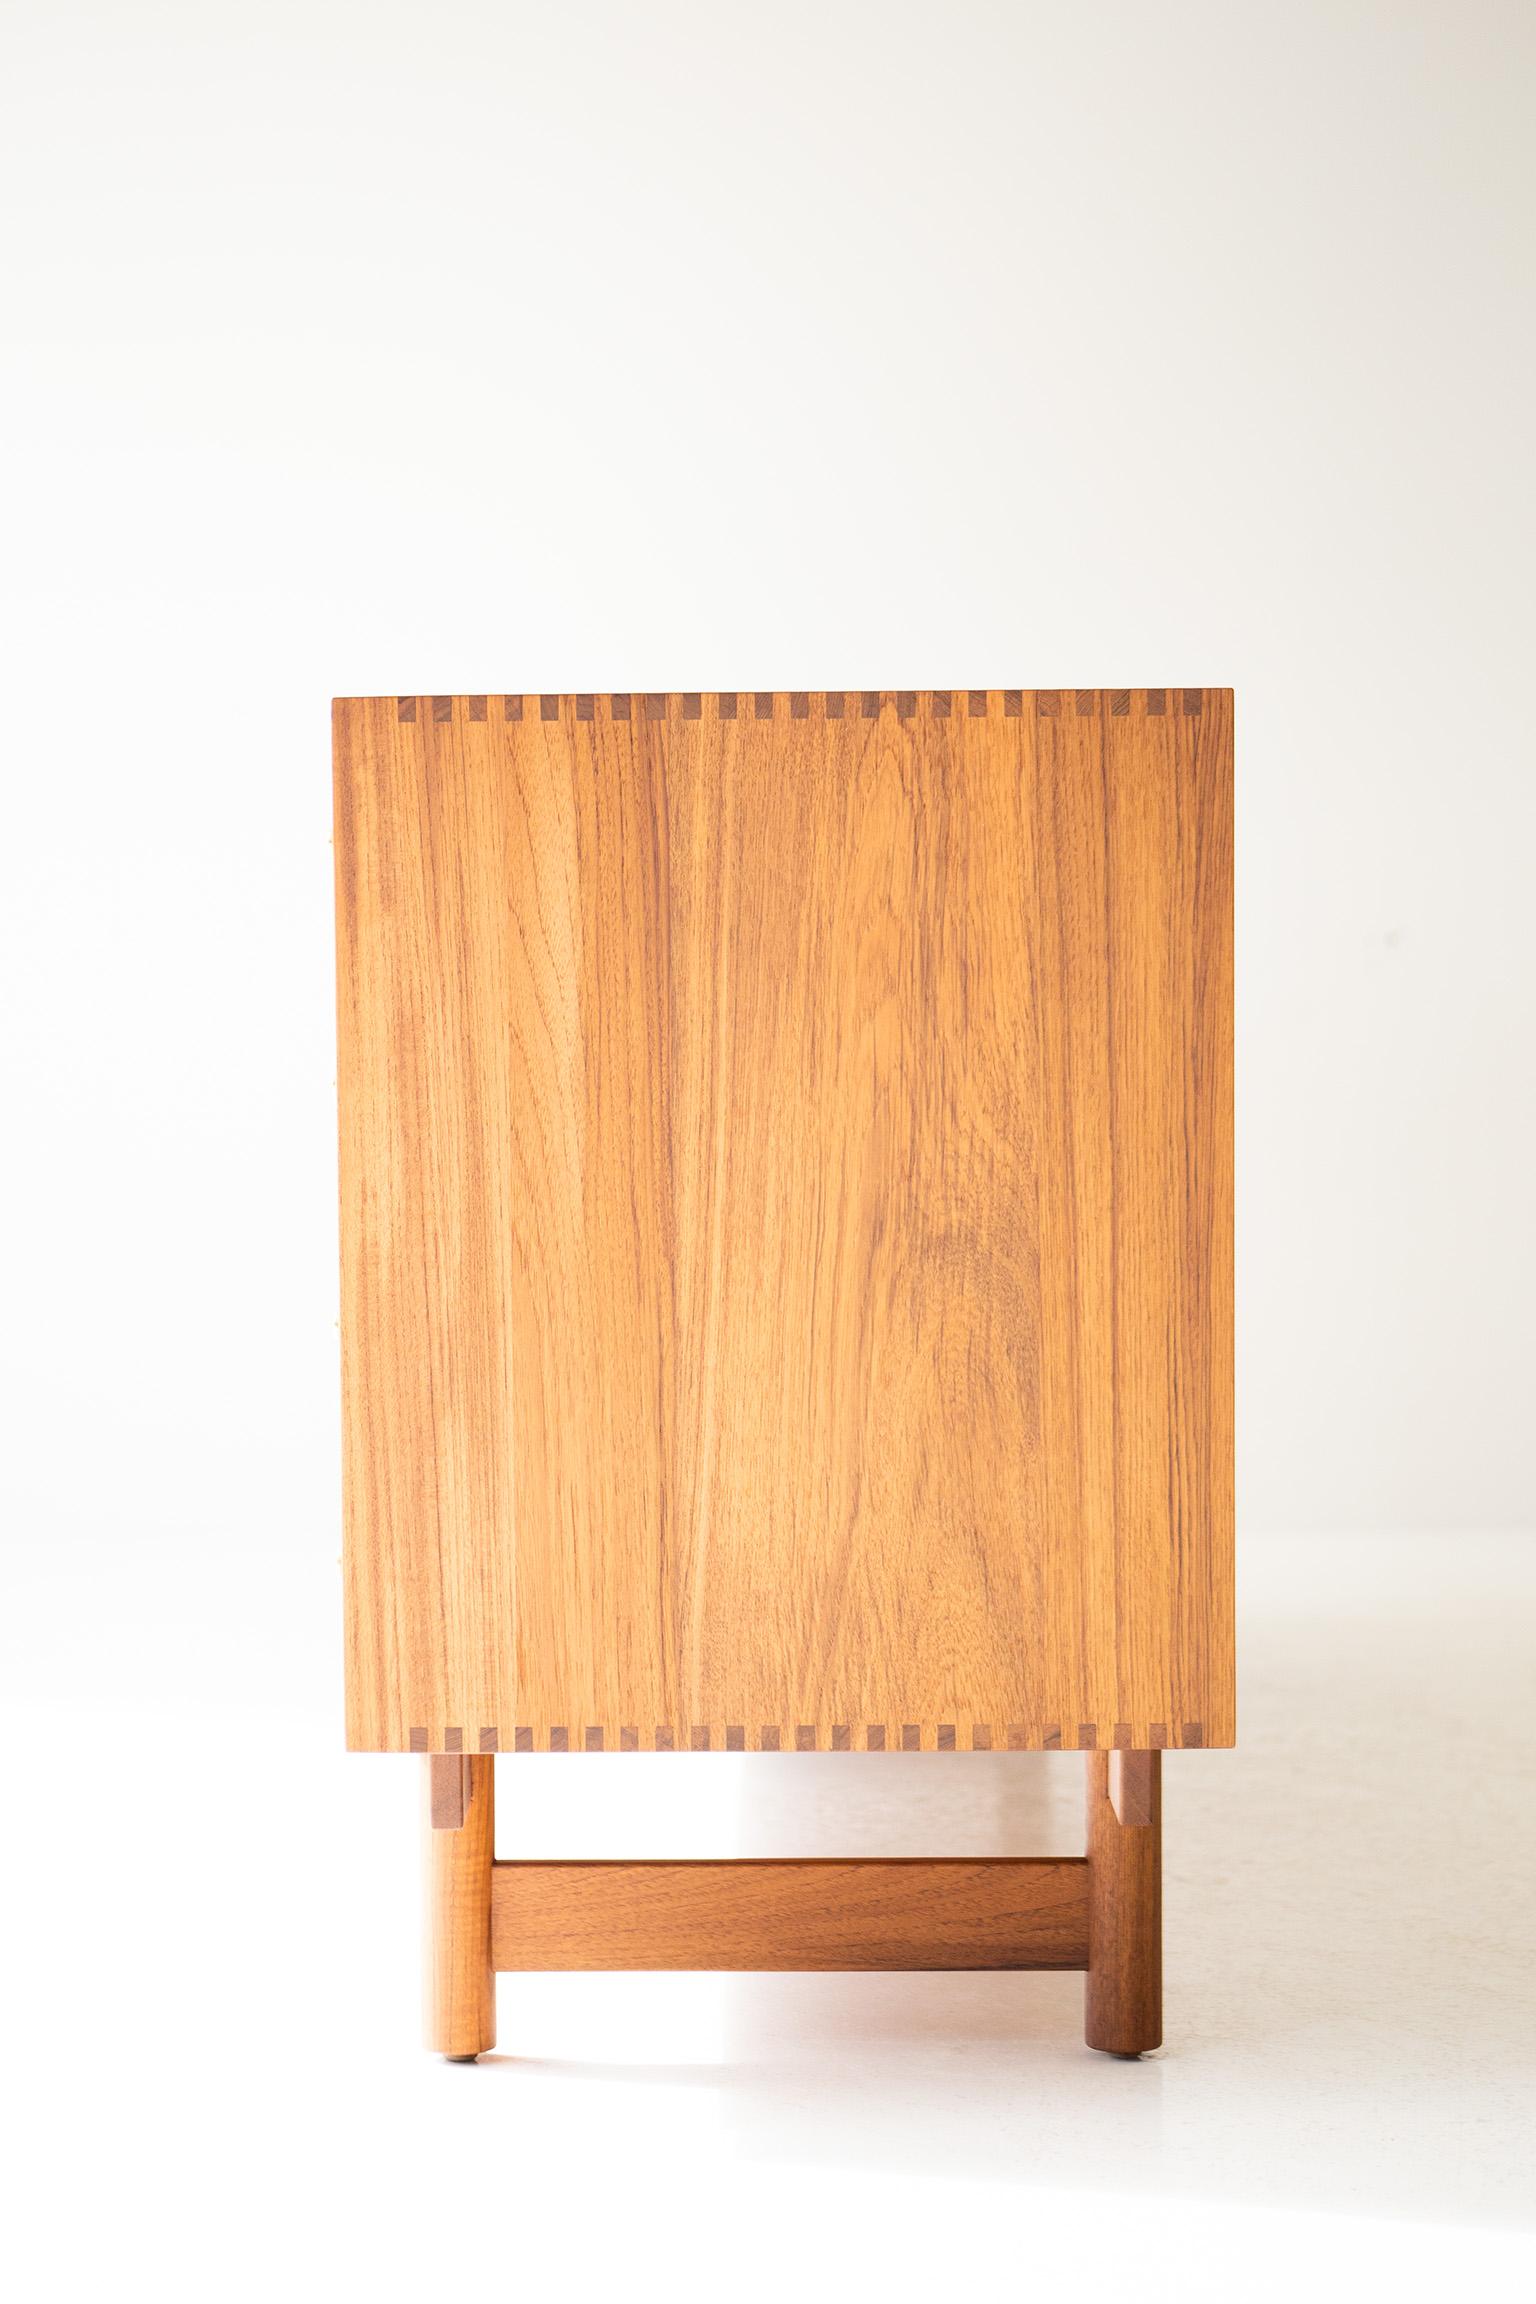 Brass Lawrence Peabody Teak Dresser 2202P for Craft Associates Furniture For Sale